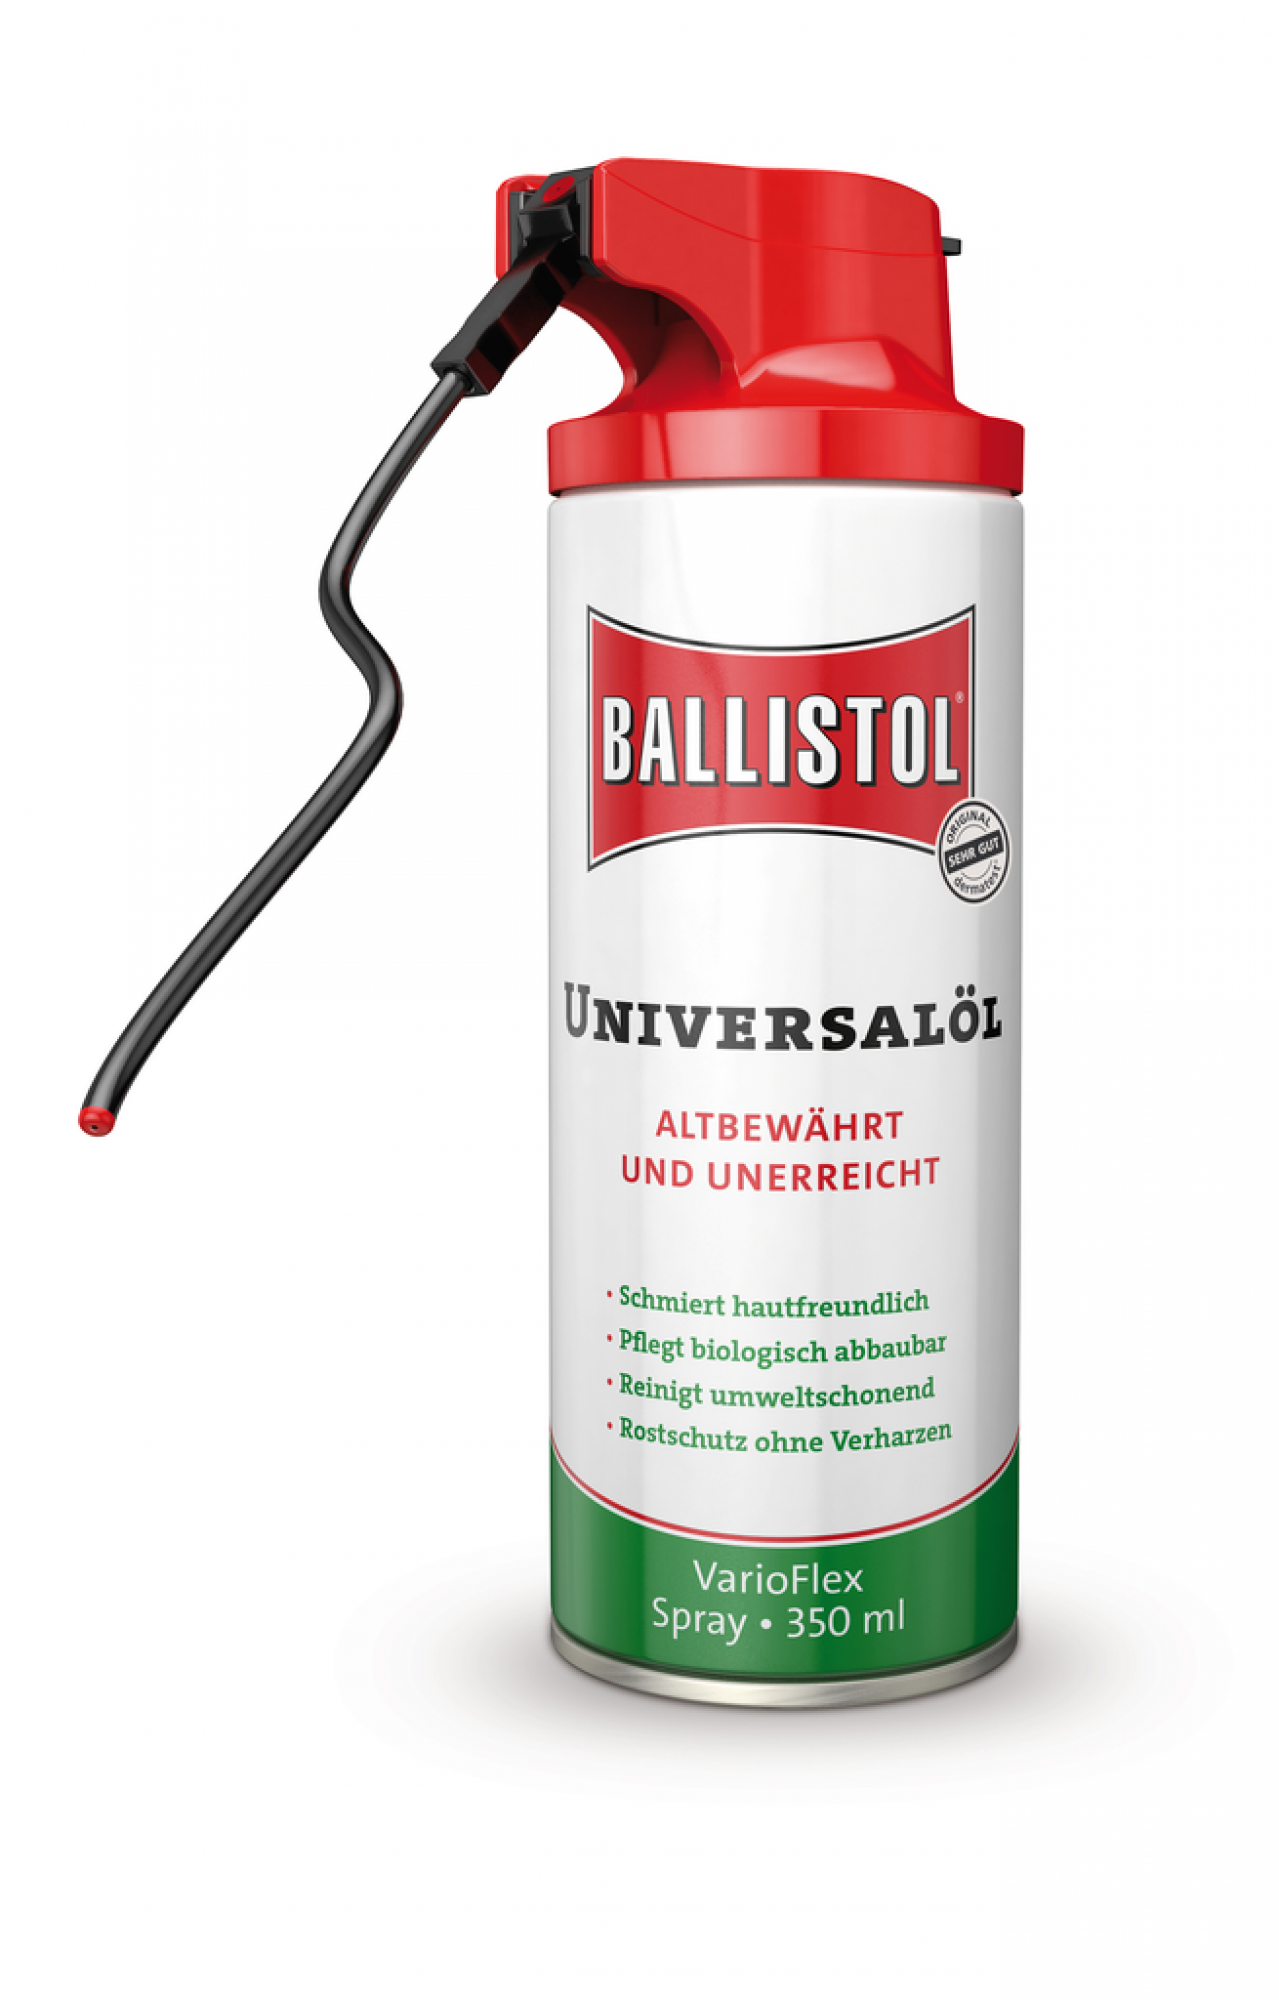 Ballistol Universal oil - Varioflex Spray 350 ml